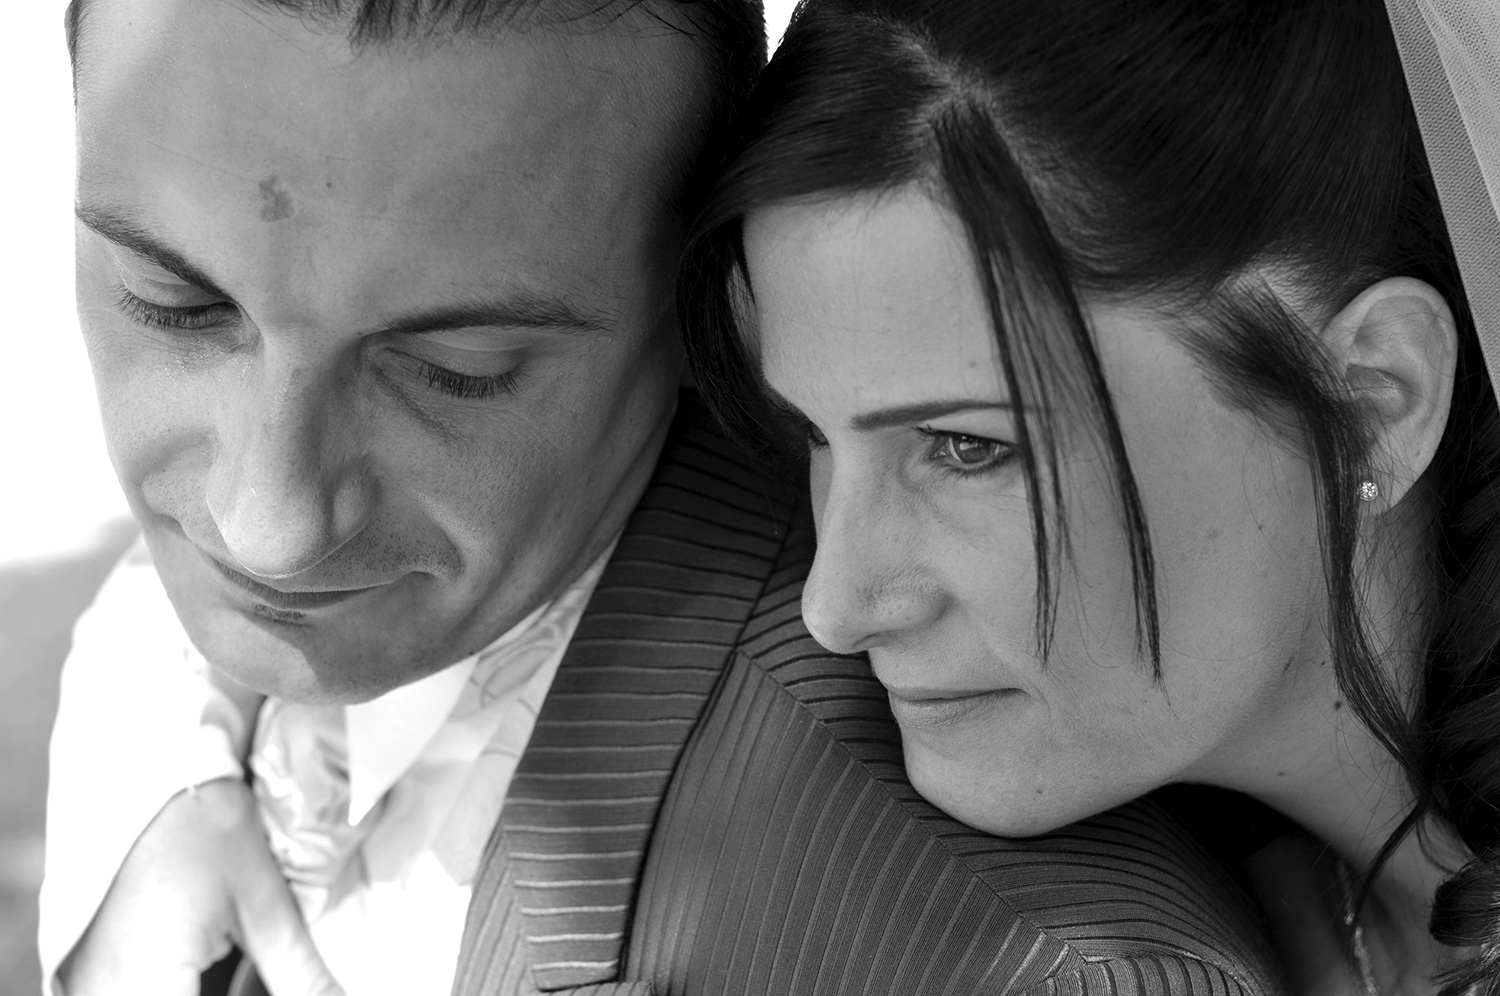 Photographe mariage Lyon